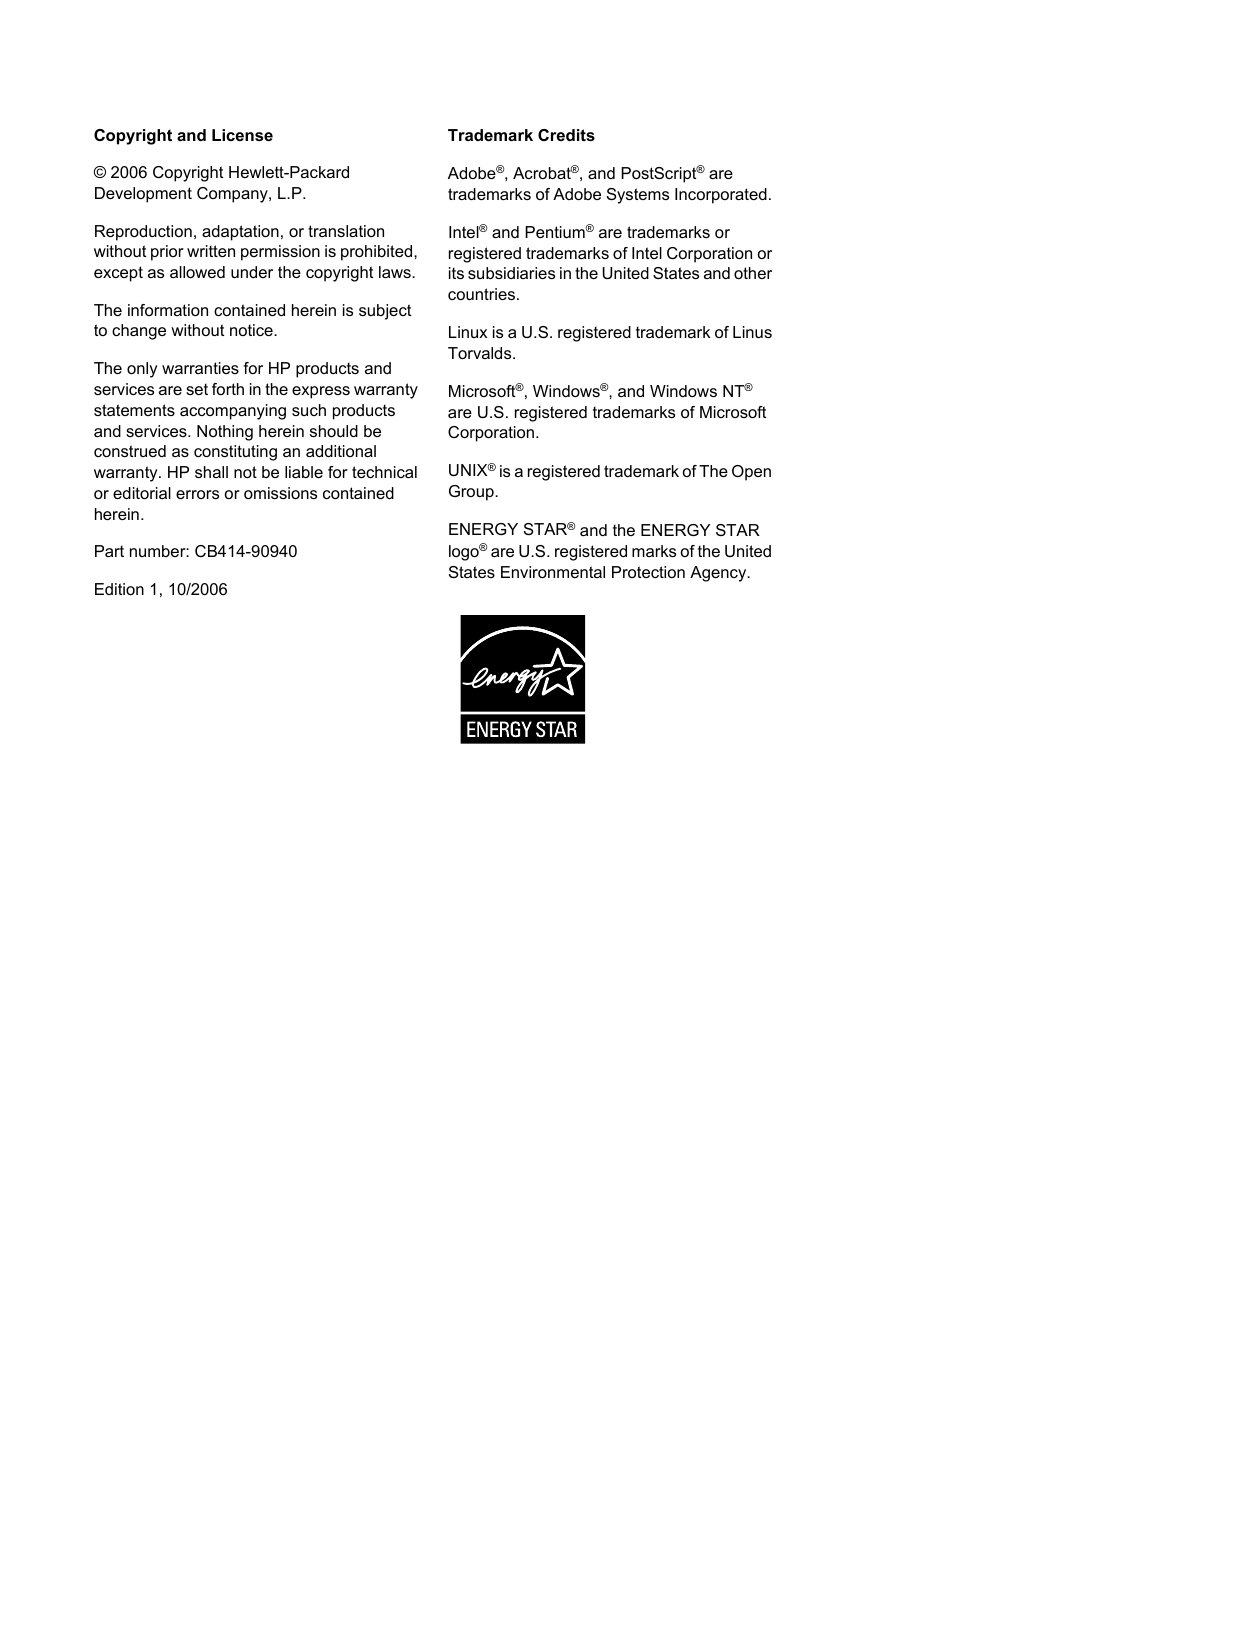 HP LaserJet M3027, M3035 multifunction printer service manual Preview image 4